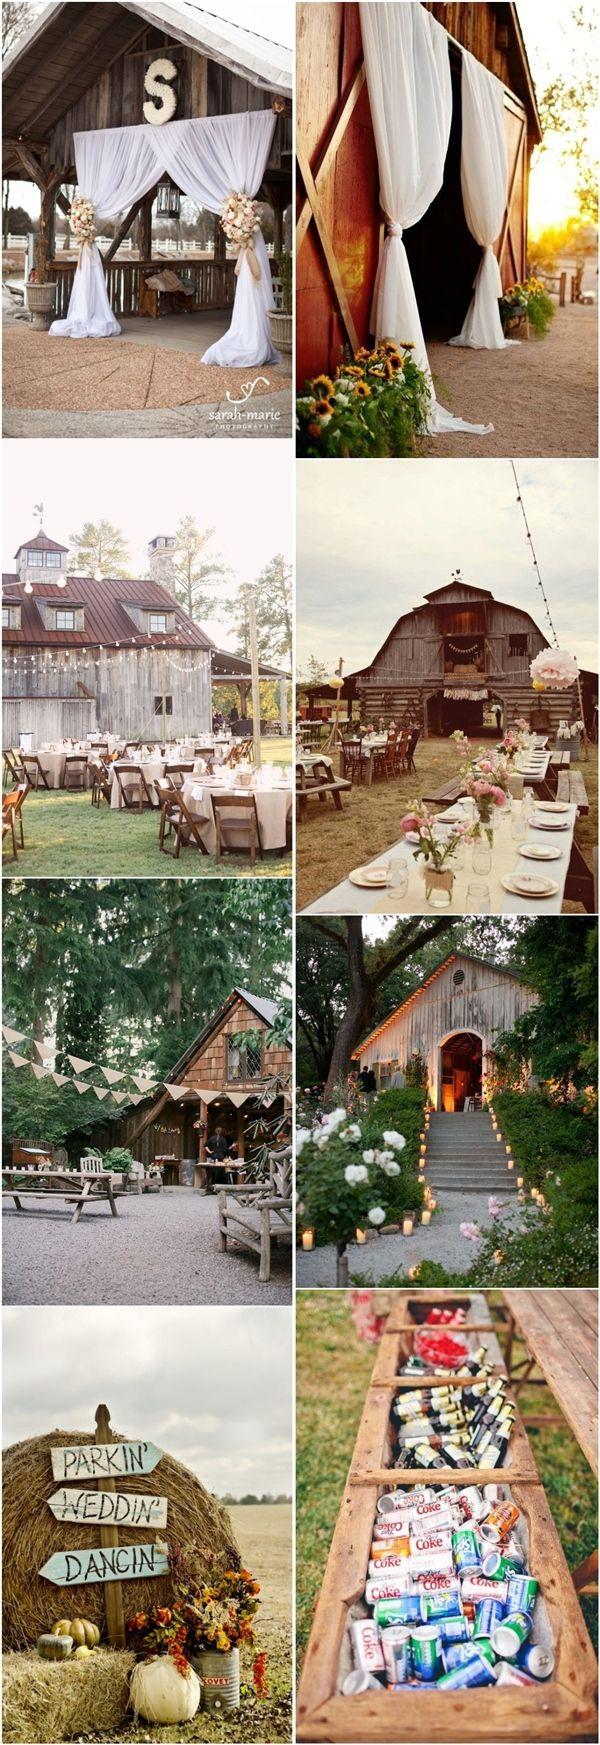 Wedding - 35 Totally Ingenious Rustic Outdoor Barn Wedding Ideas